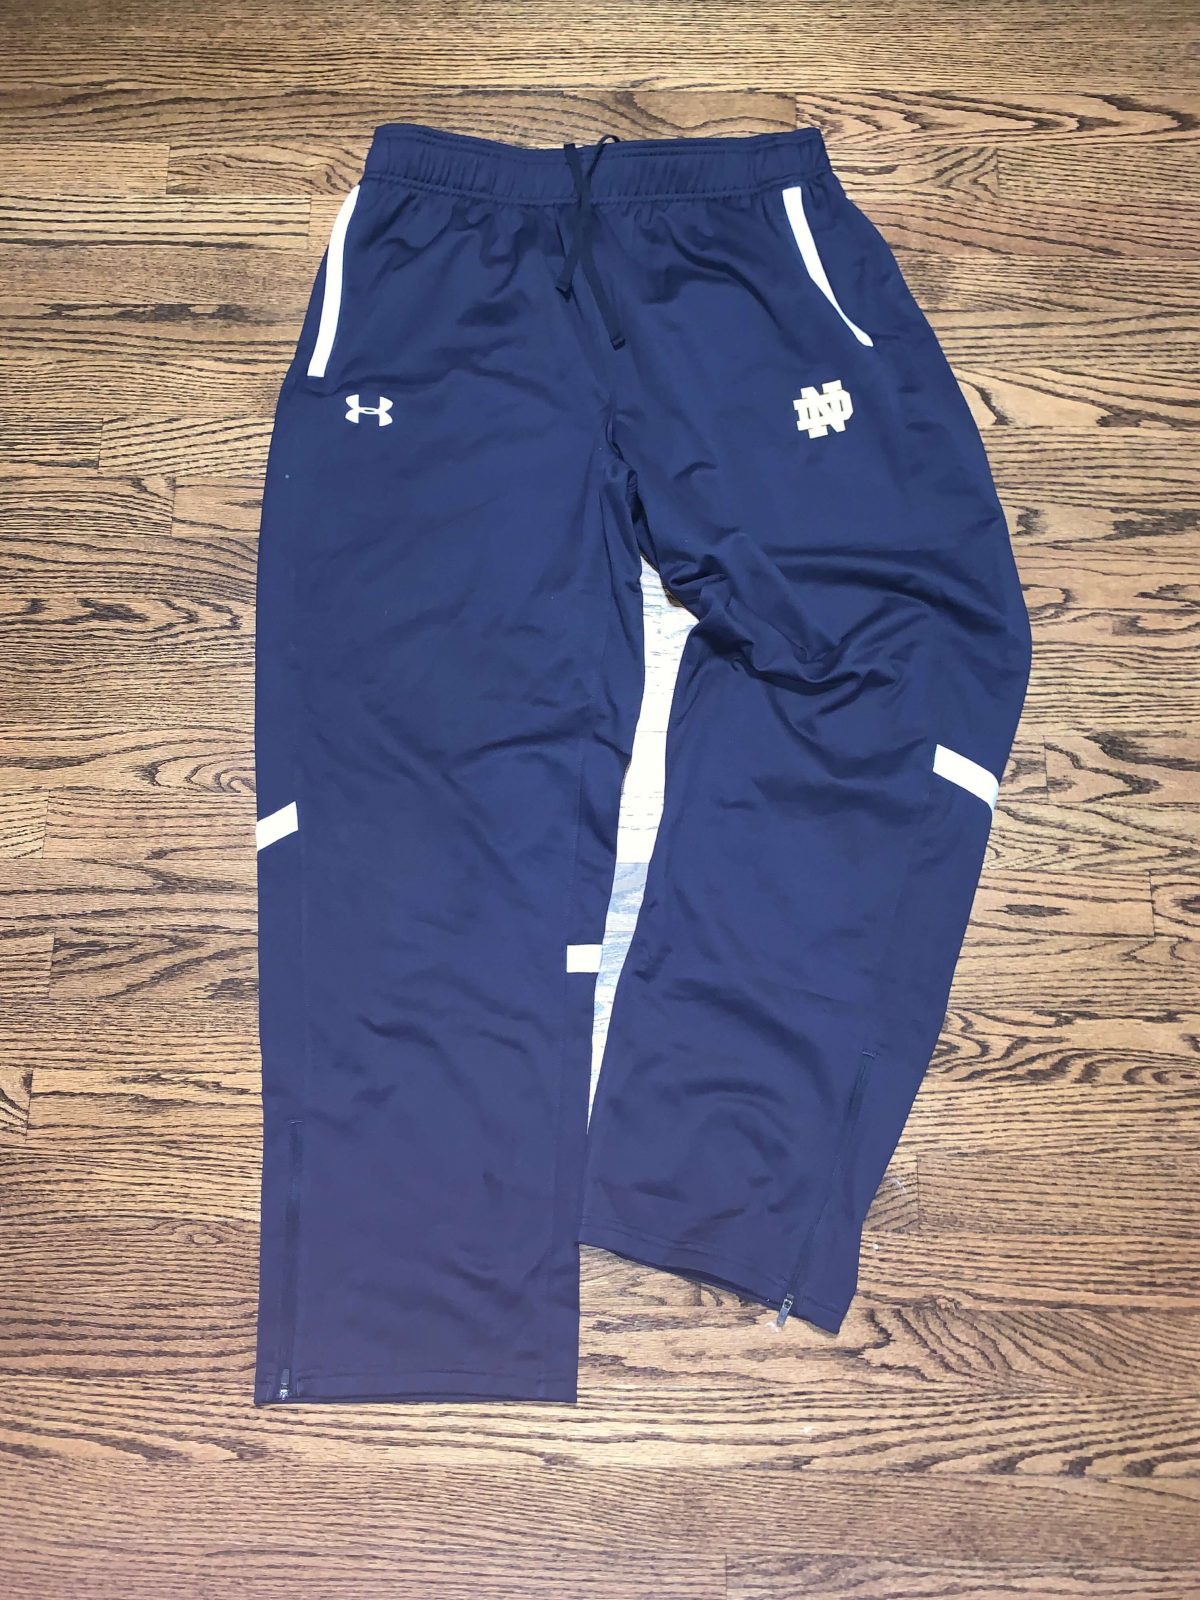 Tony Jones Jr Notre Dame Football Sweat Pants : NARP Clothing